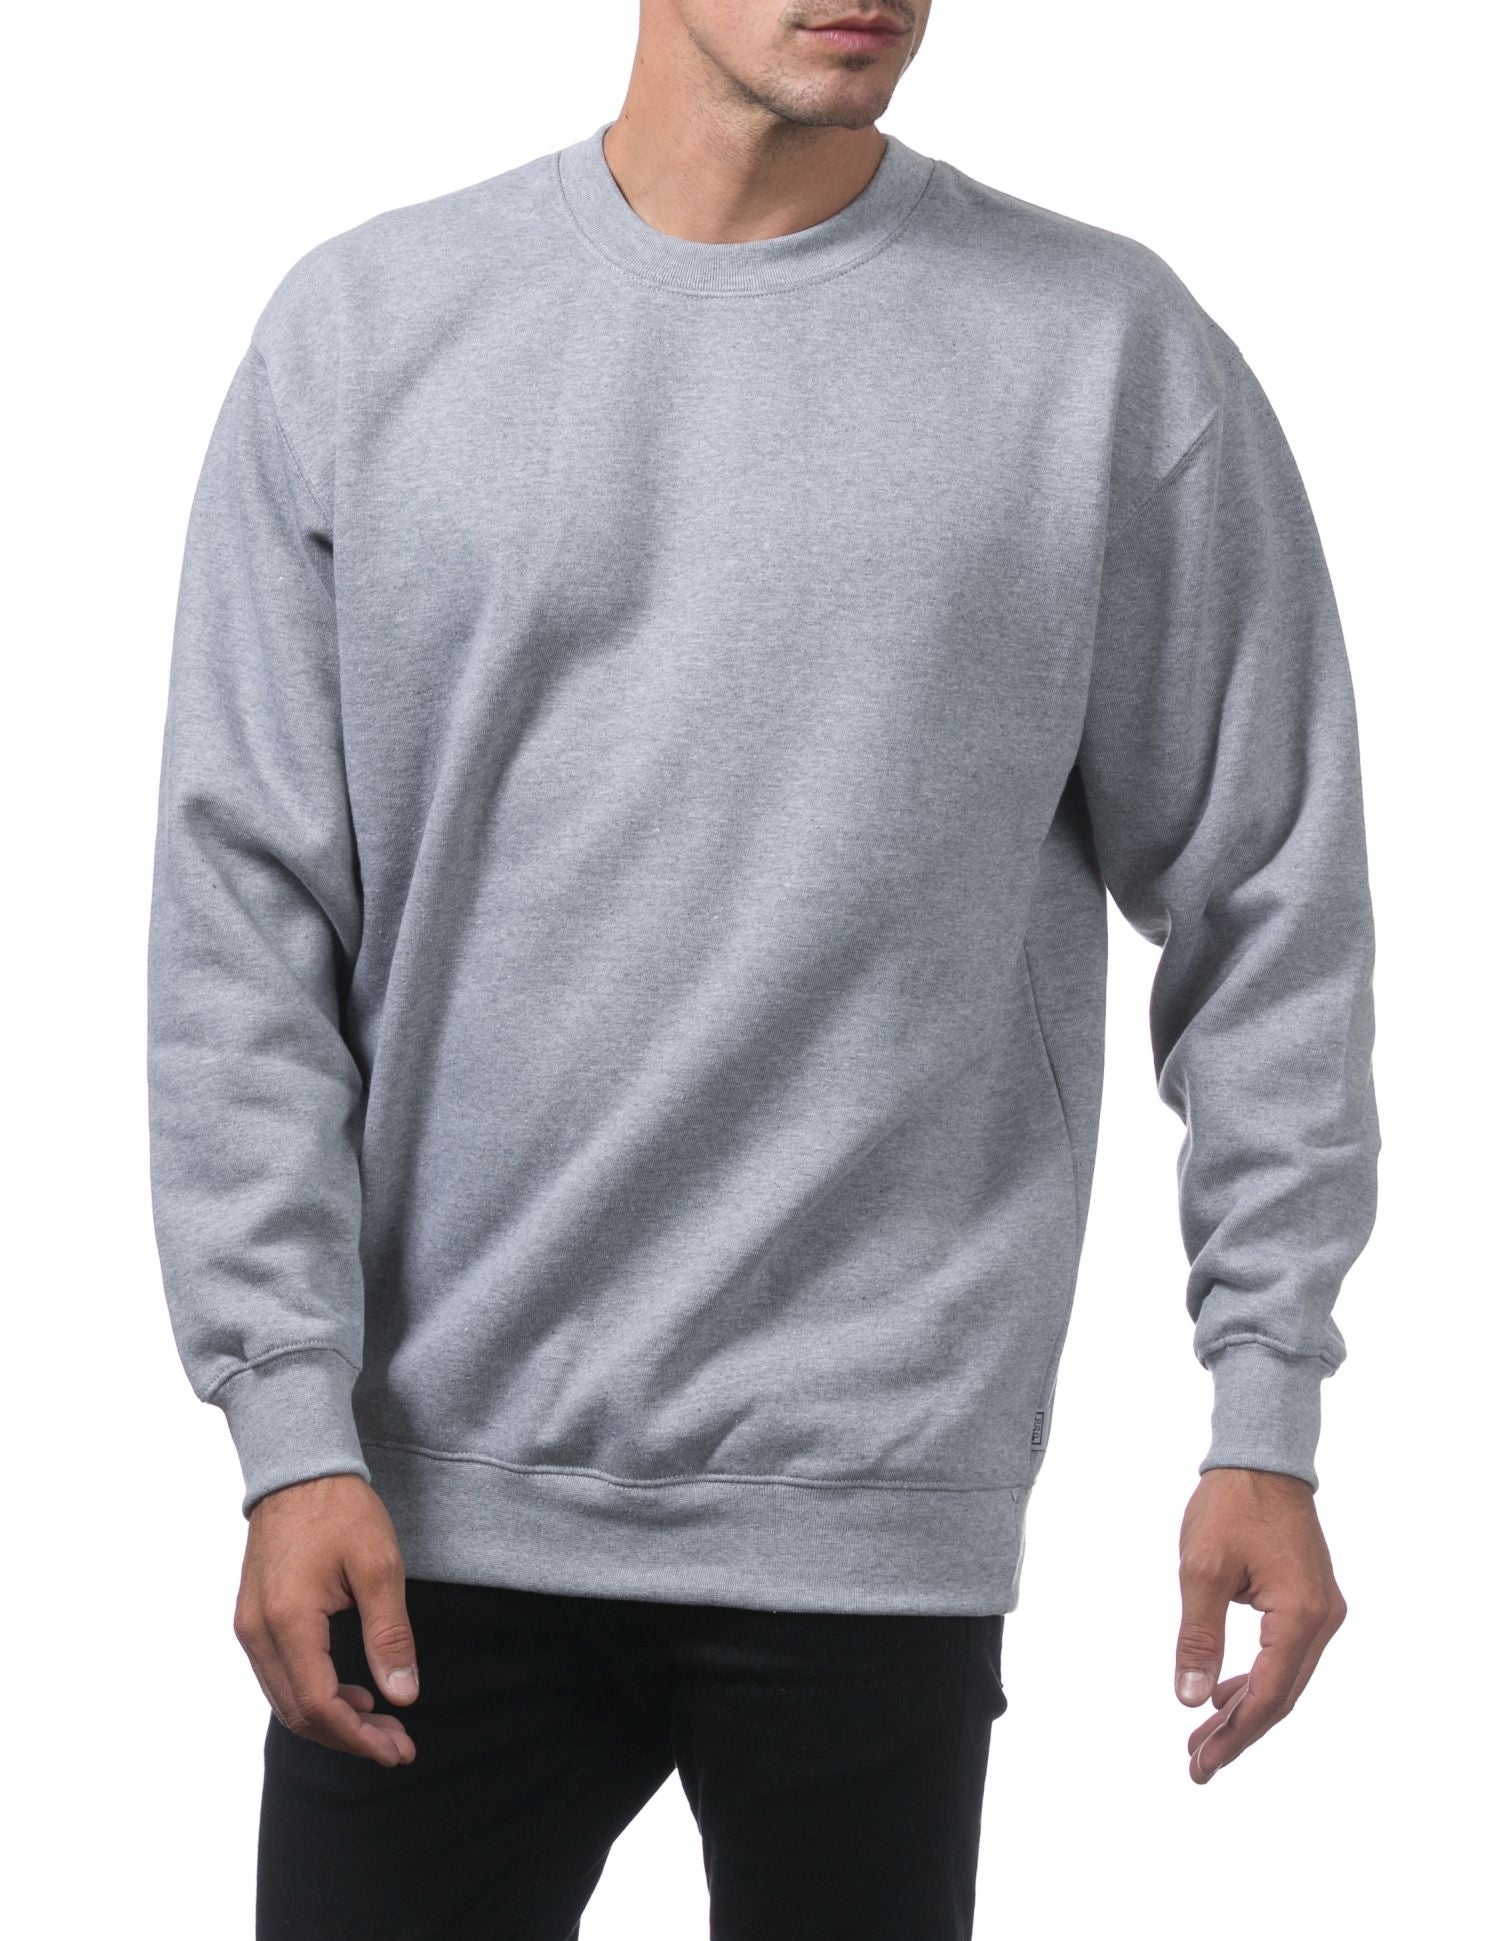 Pro Club Men's Comfort Crew Neck Fleece Pullover Sweater - Heather Gray - Medium - Pro-Distributing